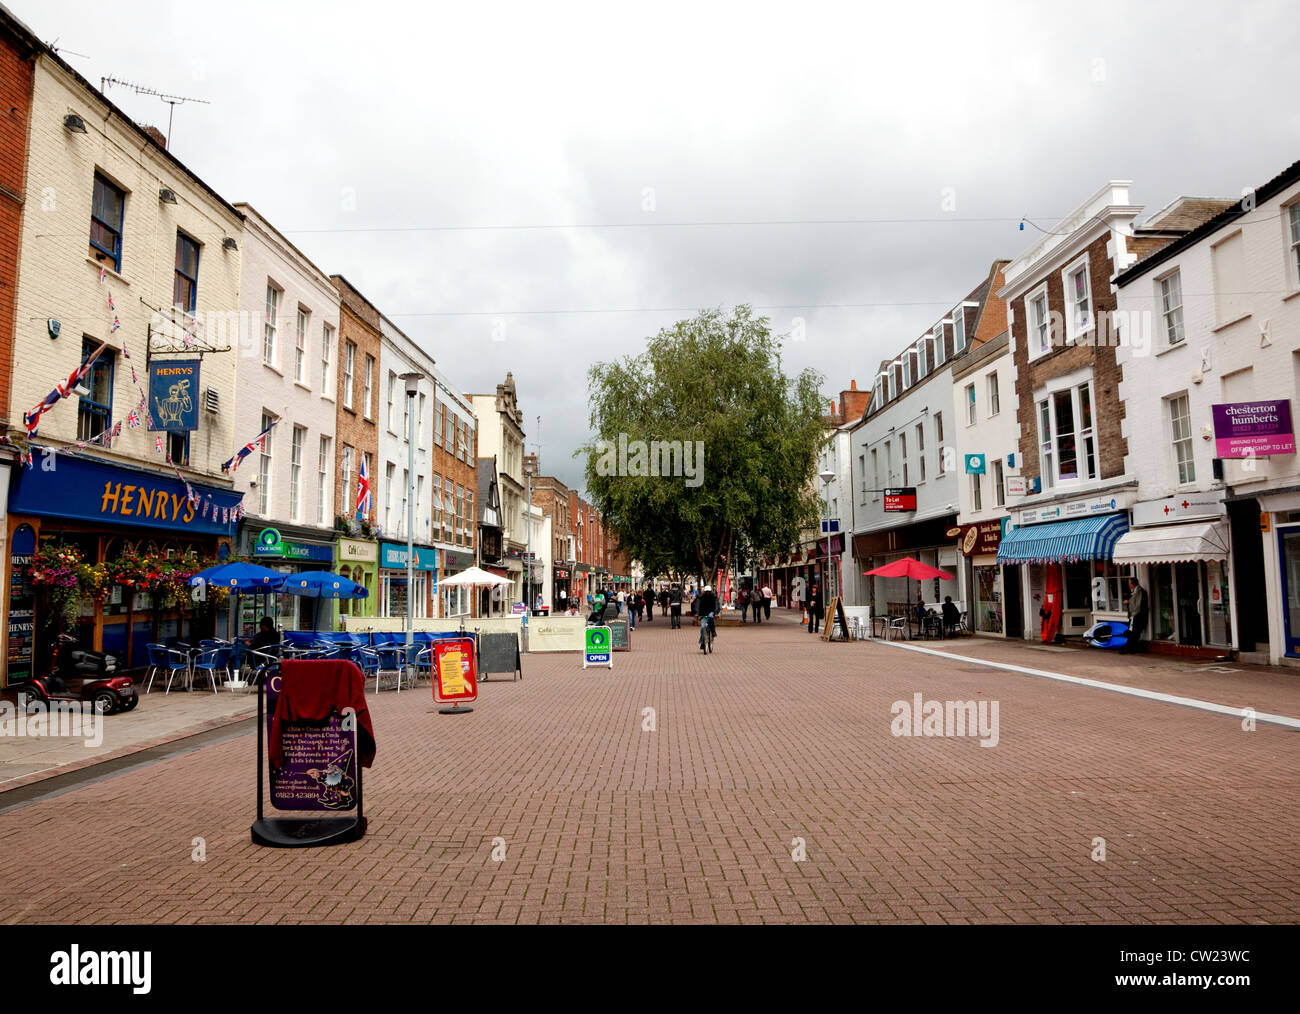 High Street, Taunton, Somerset. England Stock Photo